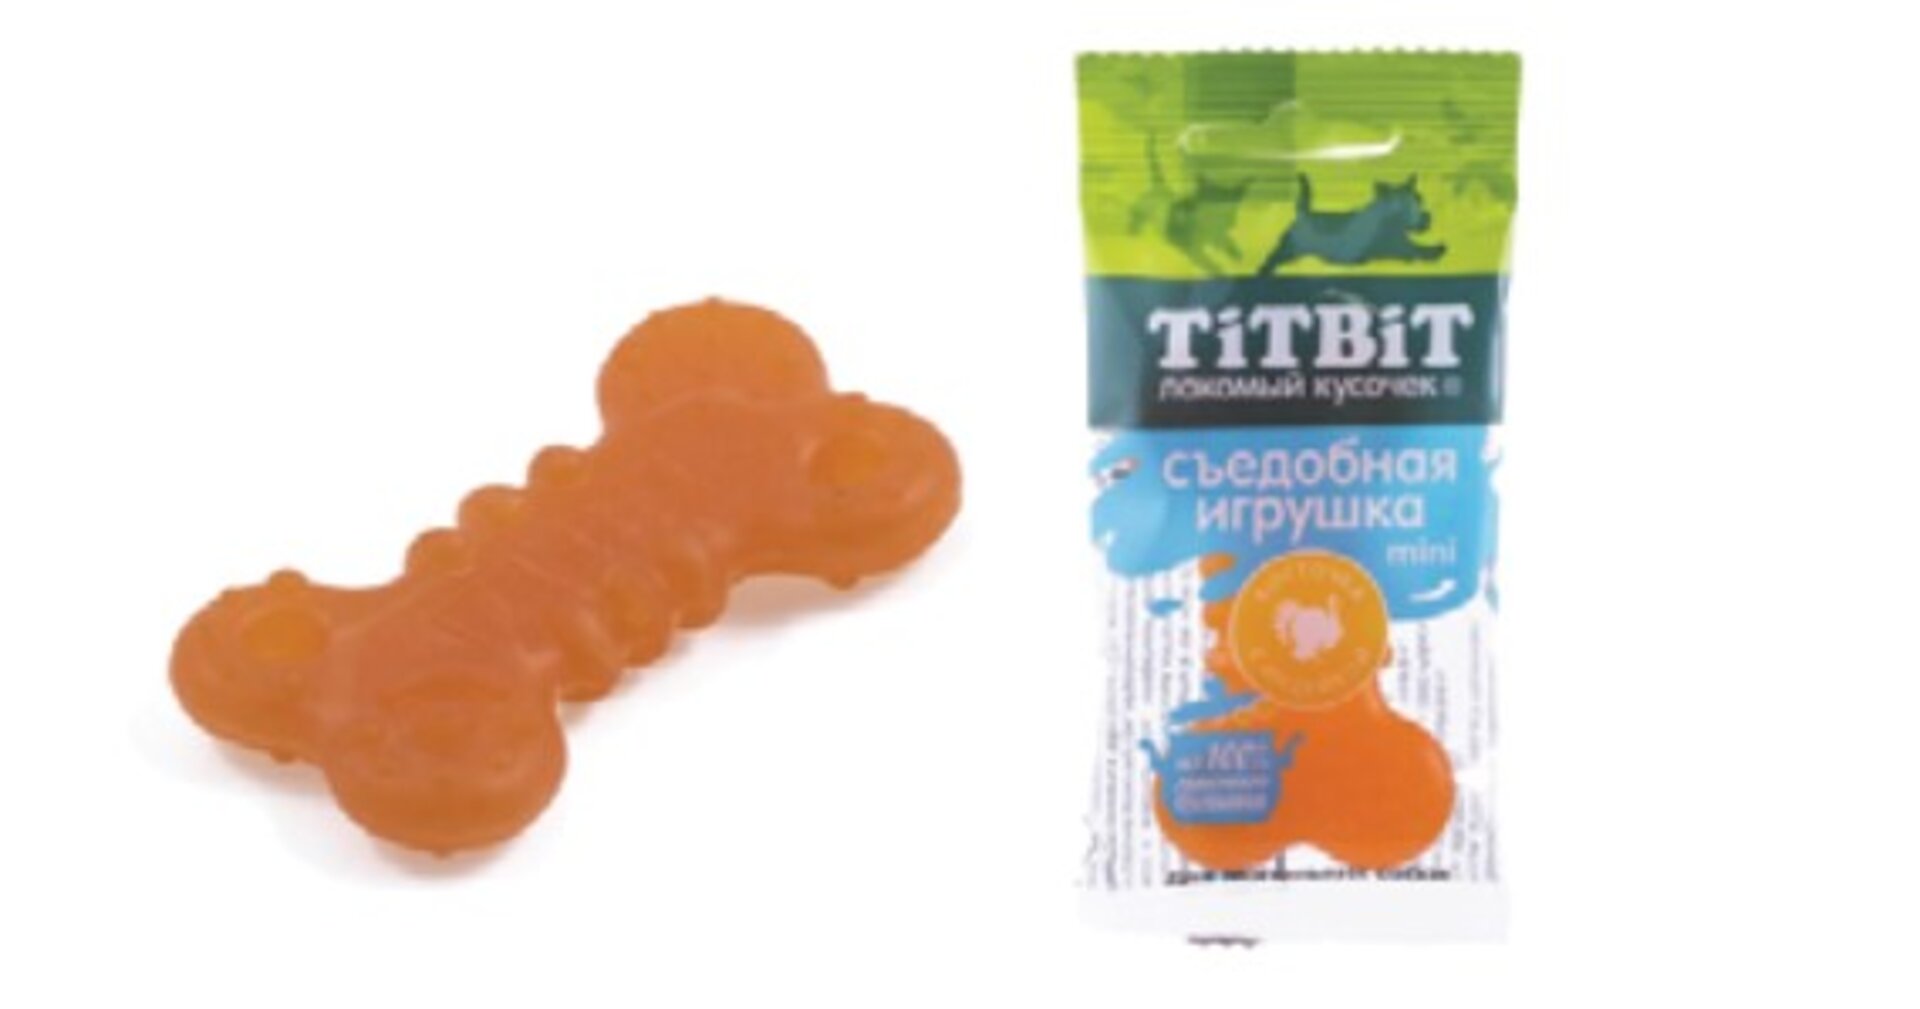 TiTBiT ტიტბიტი - საკვები სათამაშო ინდაურის ხორცით